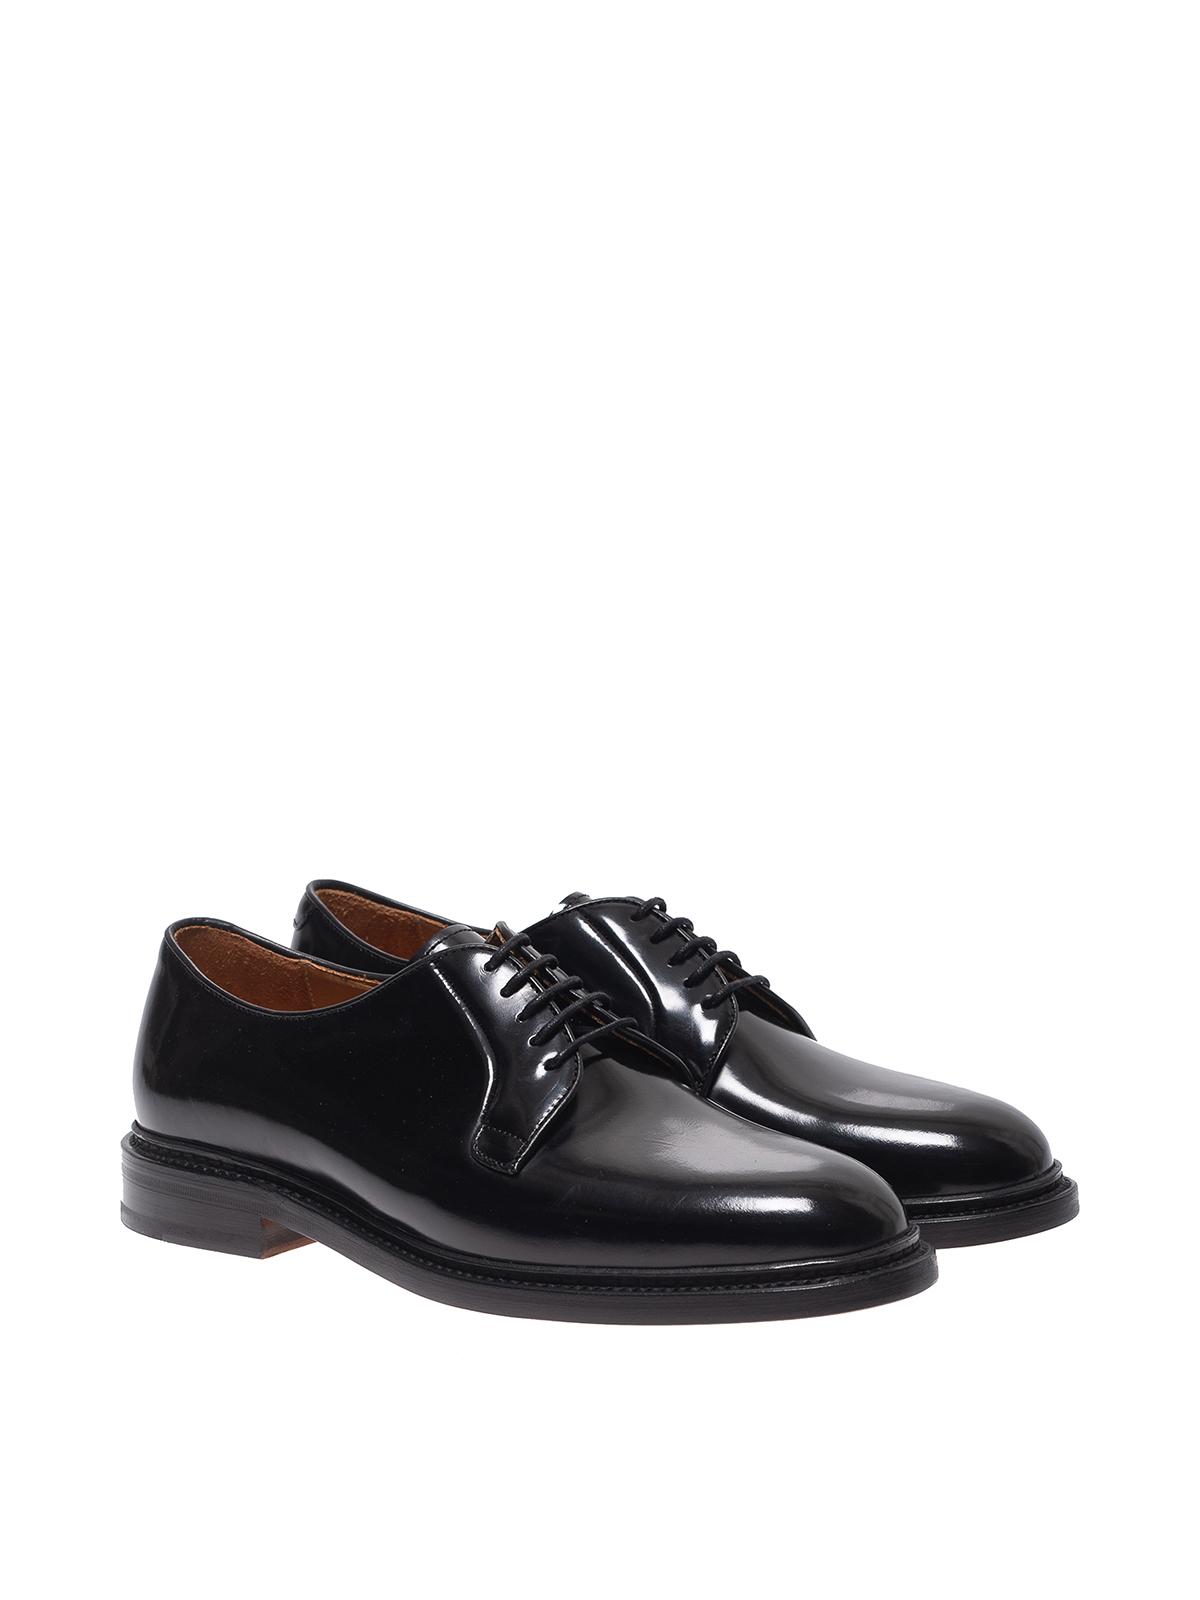 Classic shoes Berwick 1707 - Polished Derby shoes - 4406HO234NERO